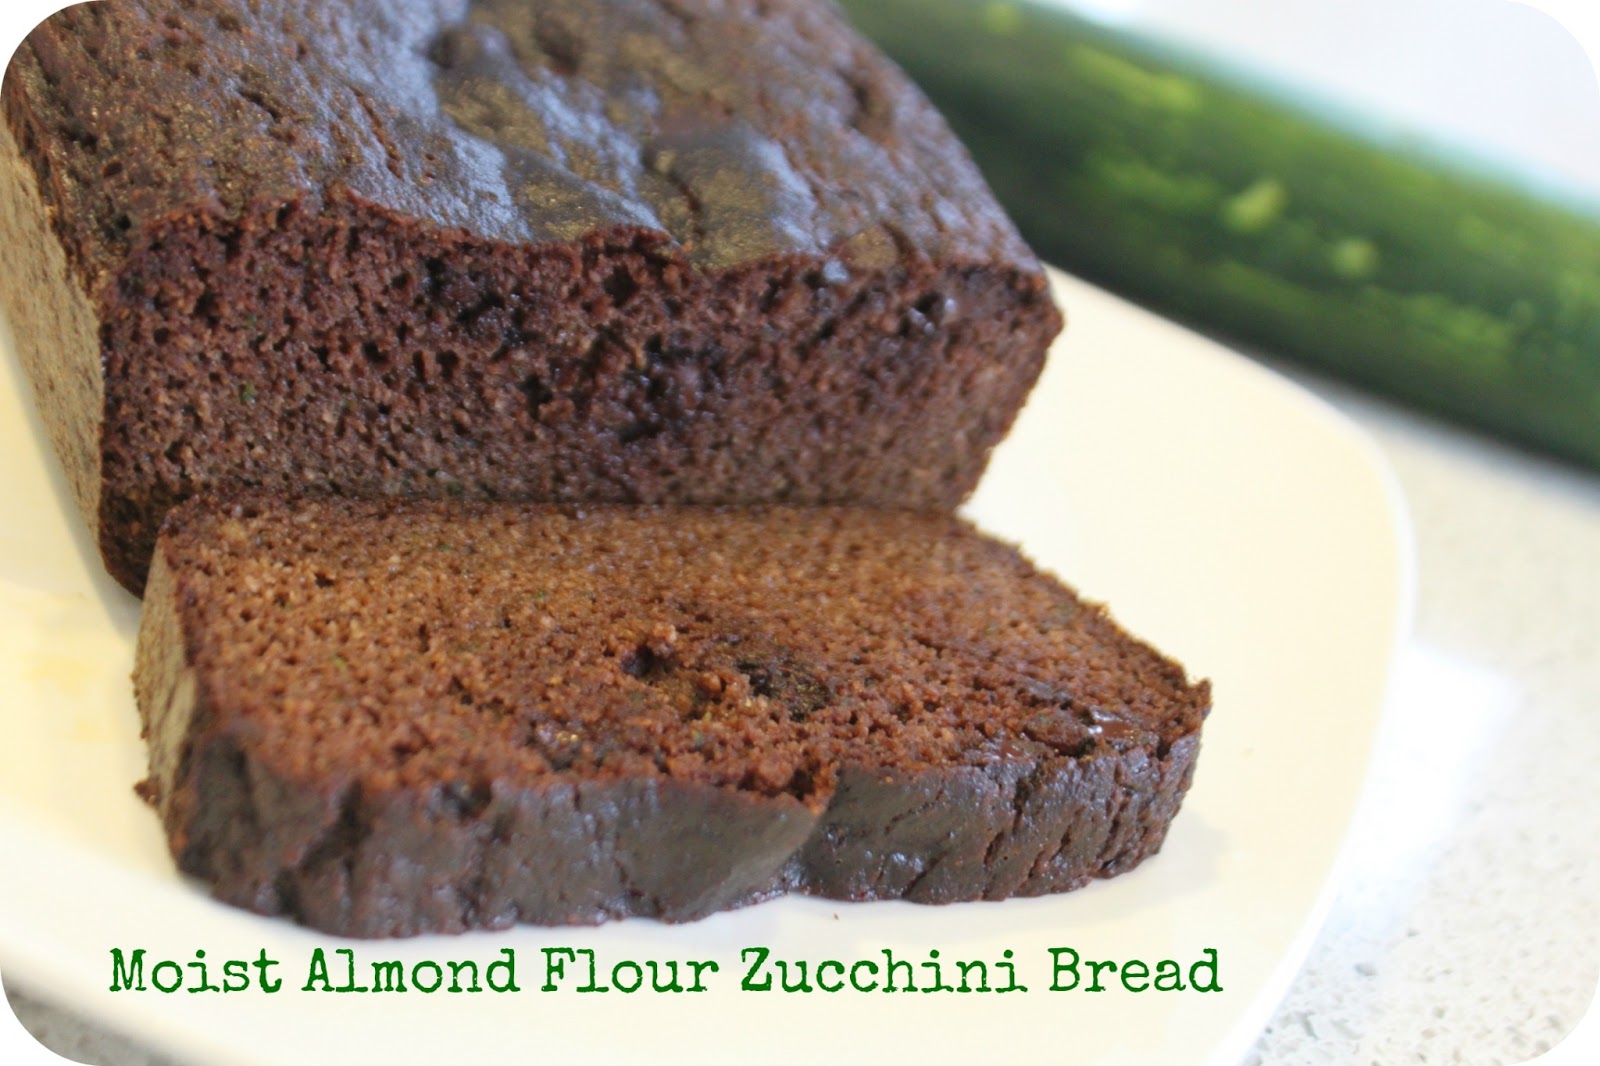 MamaEatsClean: Paleo Dark Chocolate Zucchini Bread made with Almond Flour